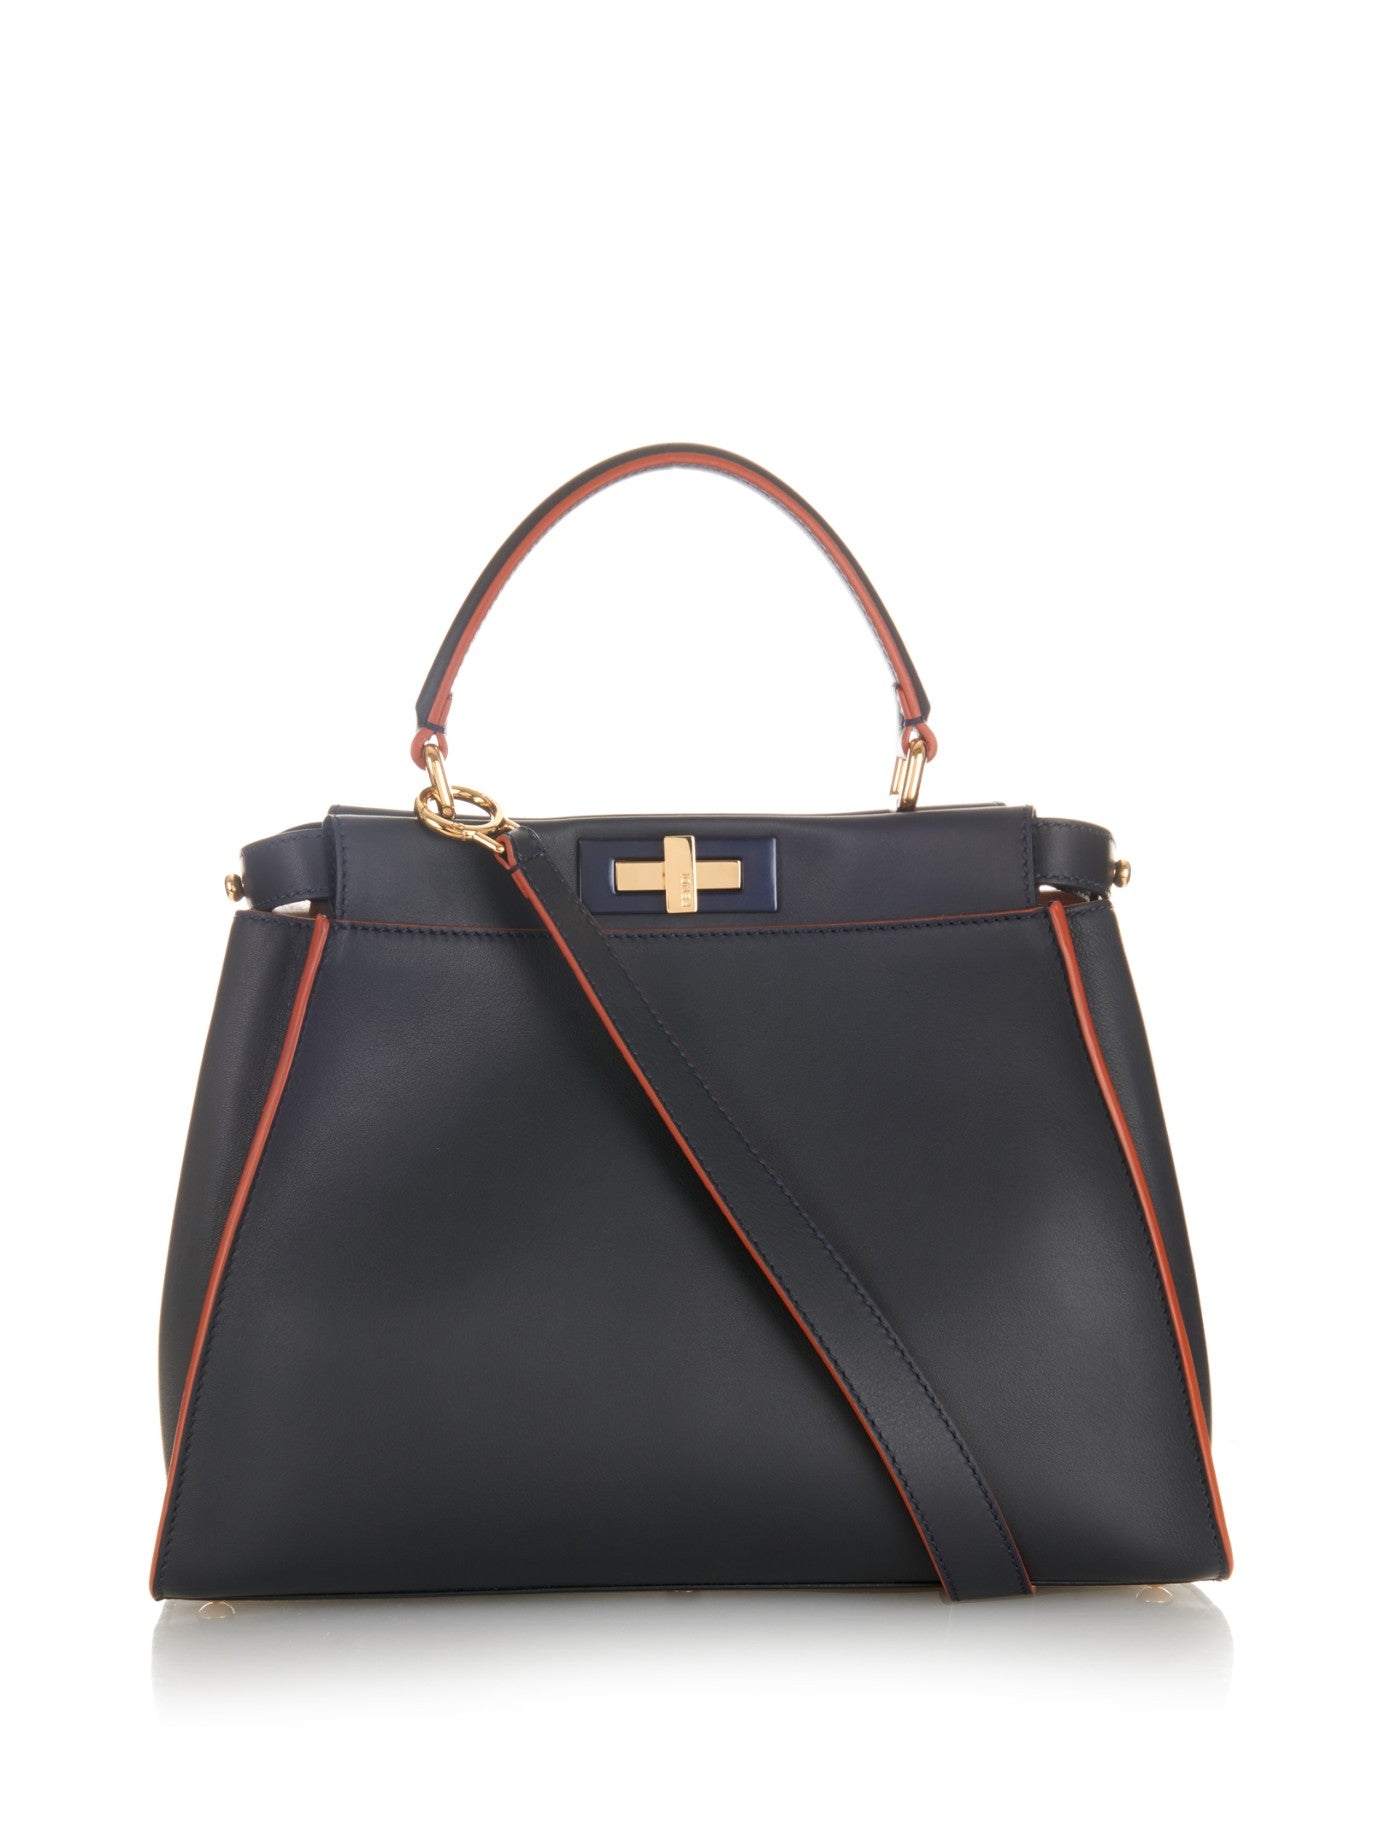 Re-sell Your Fendi Handbags Online | Rebag